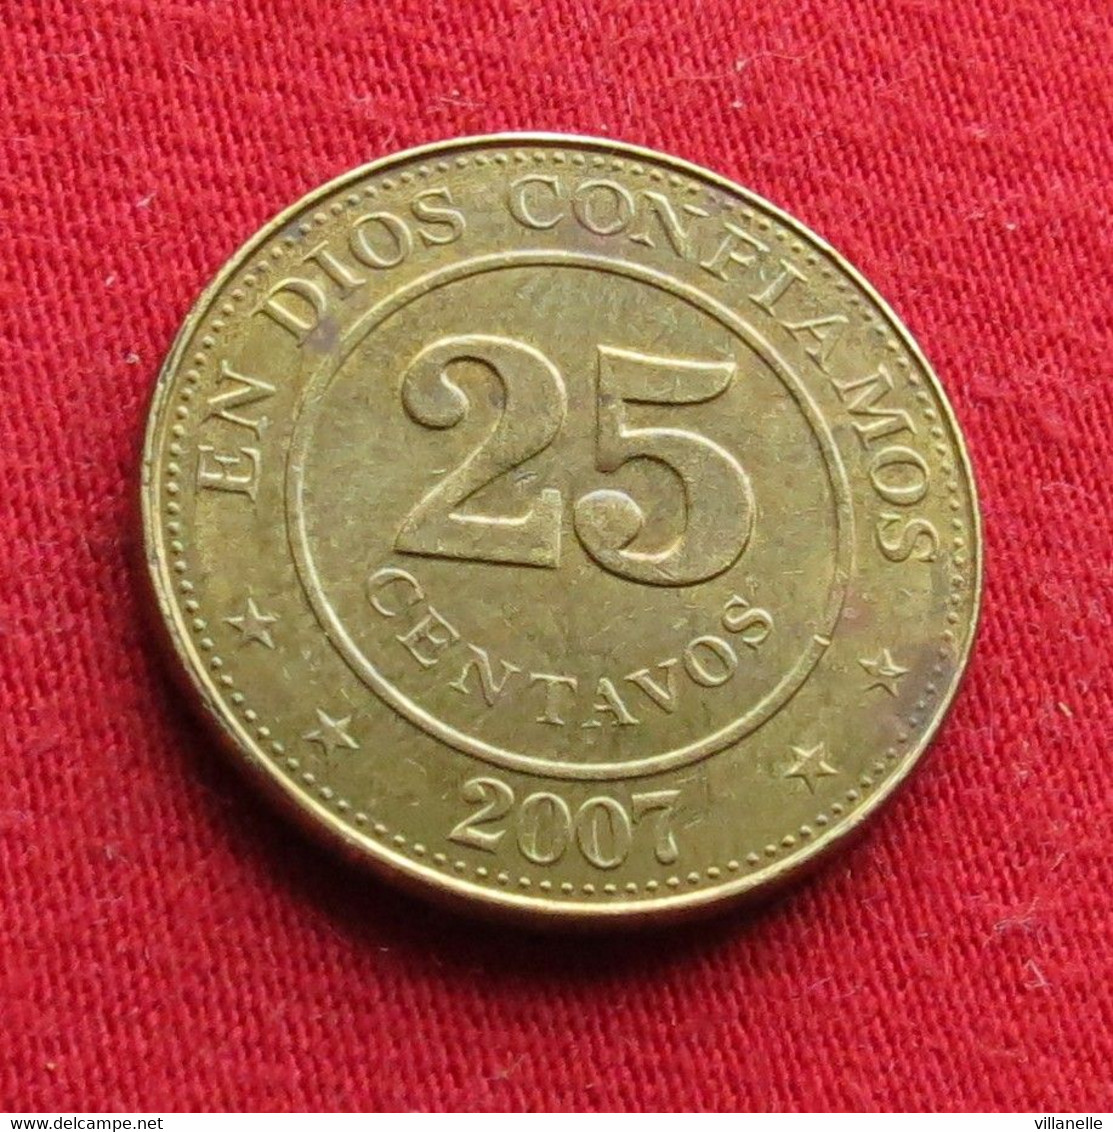 Nicaragua 25 Centavos 2007 - Nicaragua